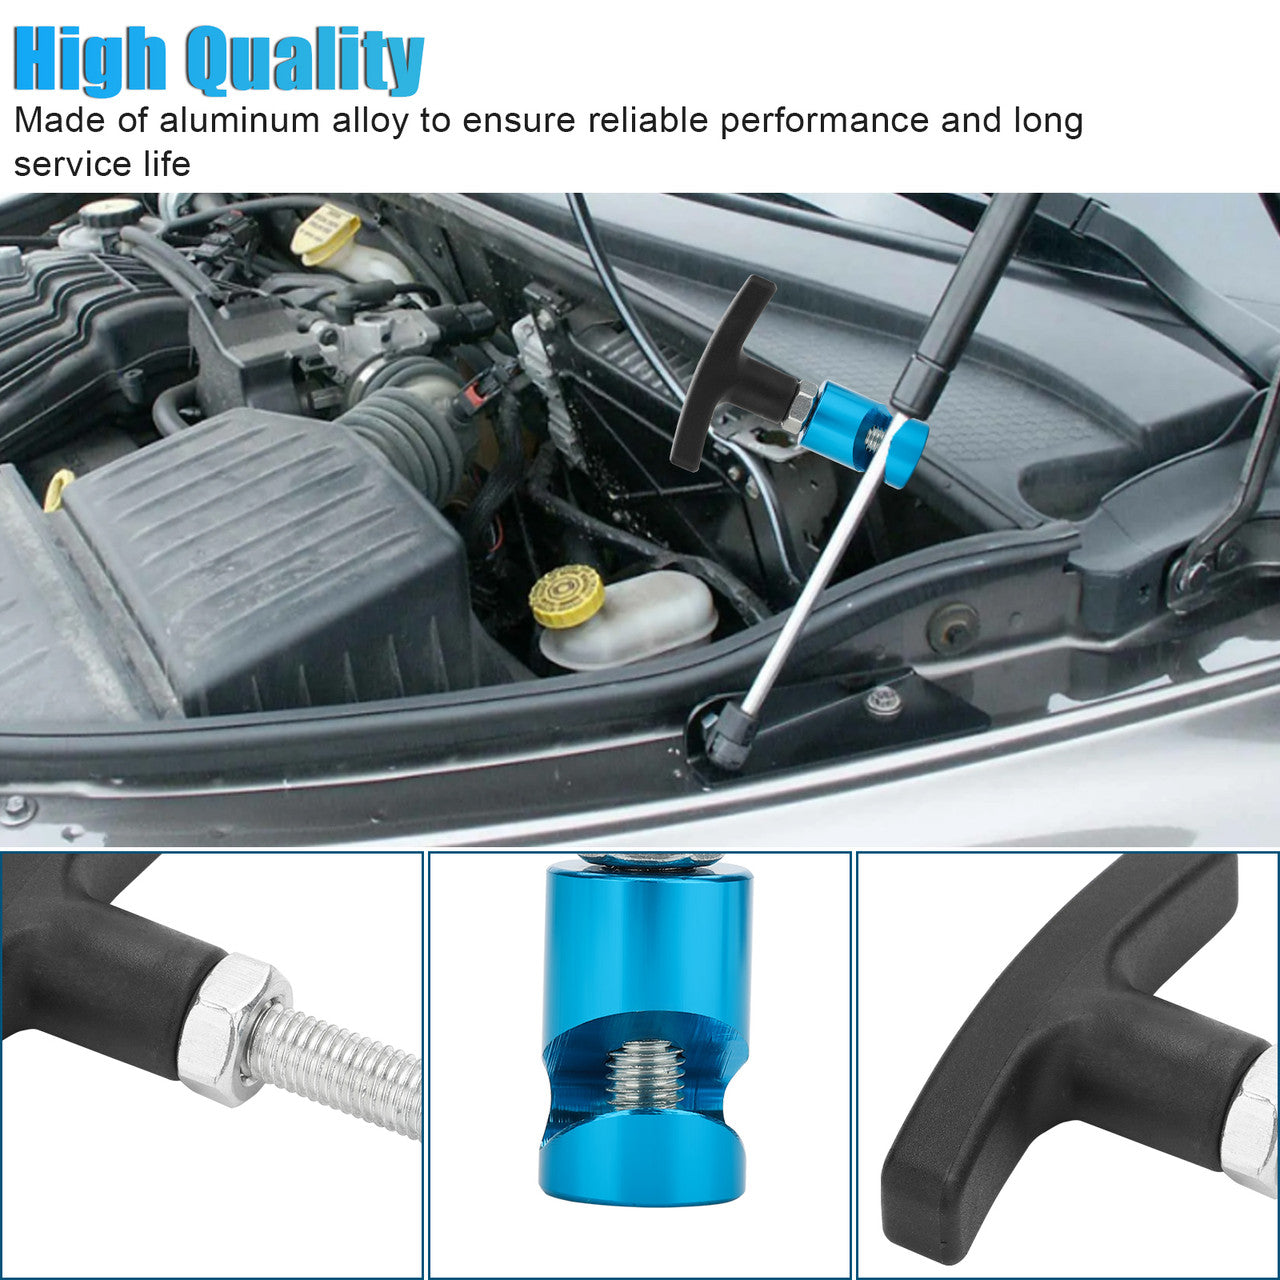 Car Lift Support Clamp Hood Holder - For Hood Lift Support Clip,Car Hood Clamp,suits 14mm lift support (Blue)